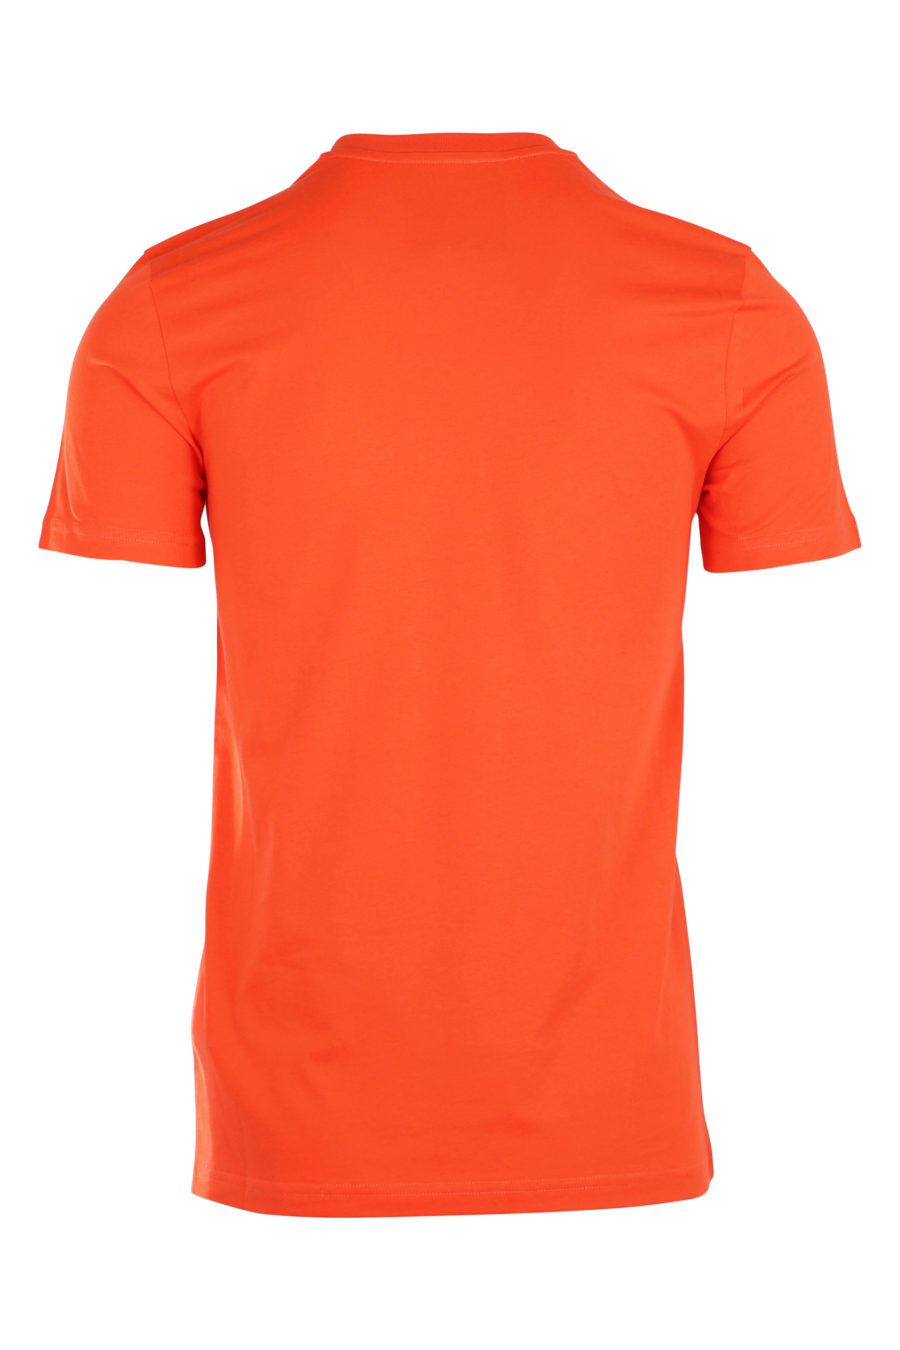 Orangefarbenes T-Shirt mit großem "Fantasy"-Logo - IMG 9938 1